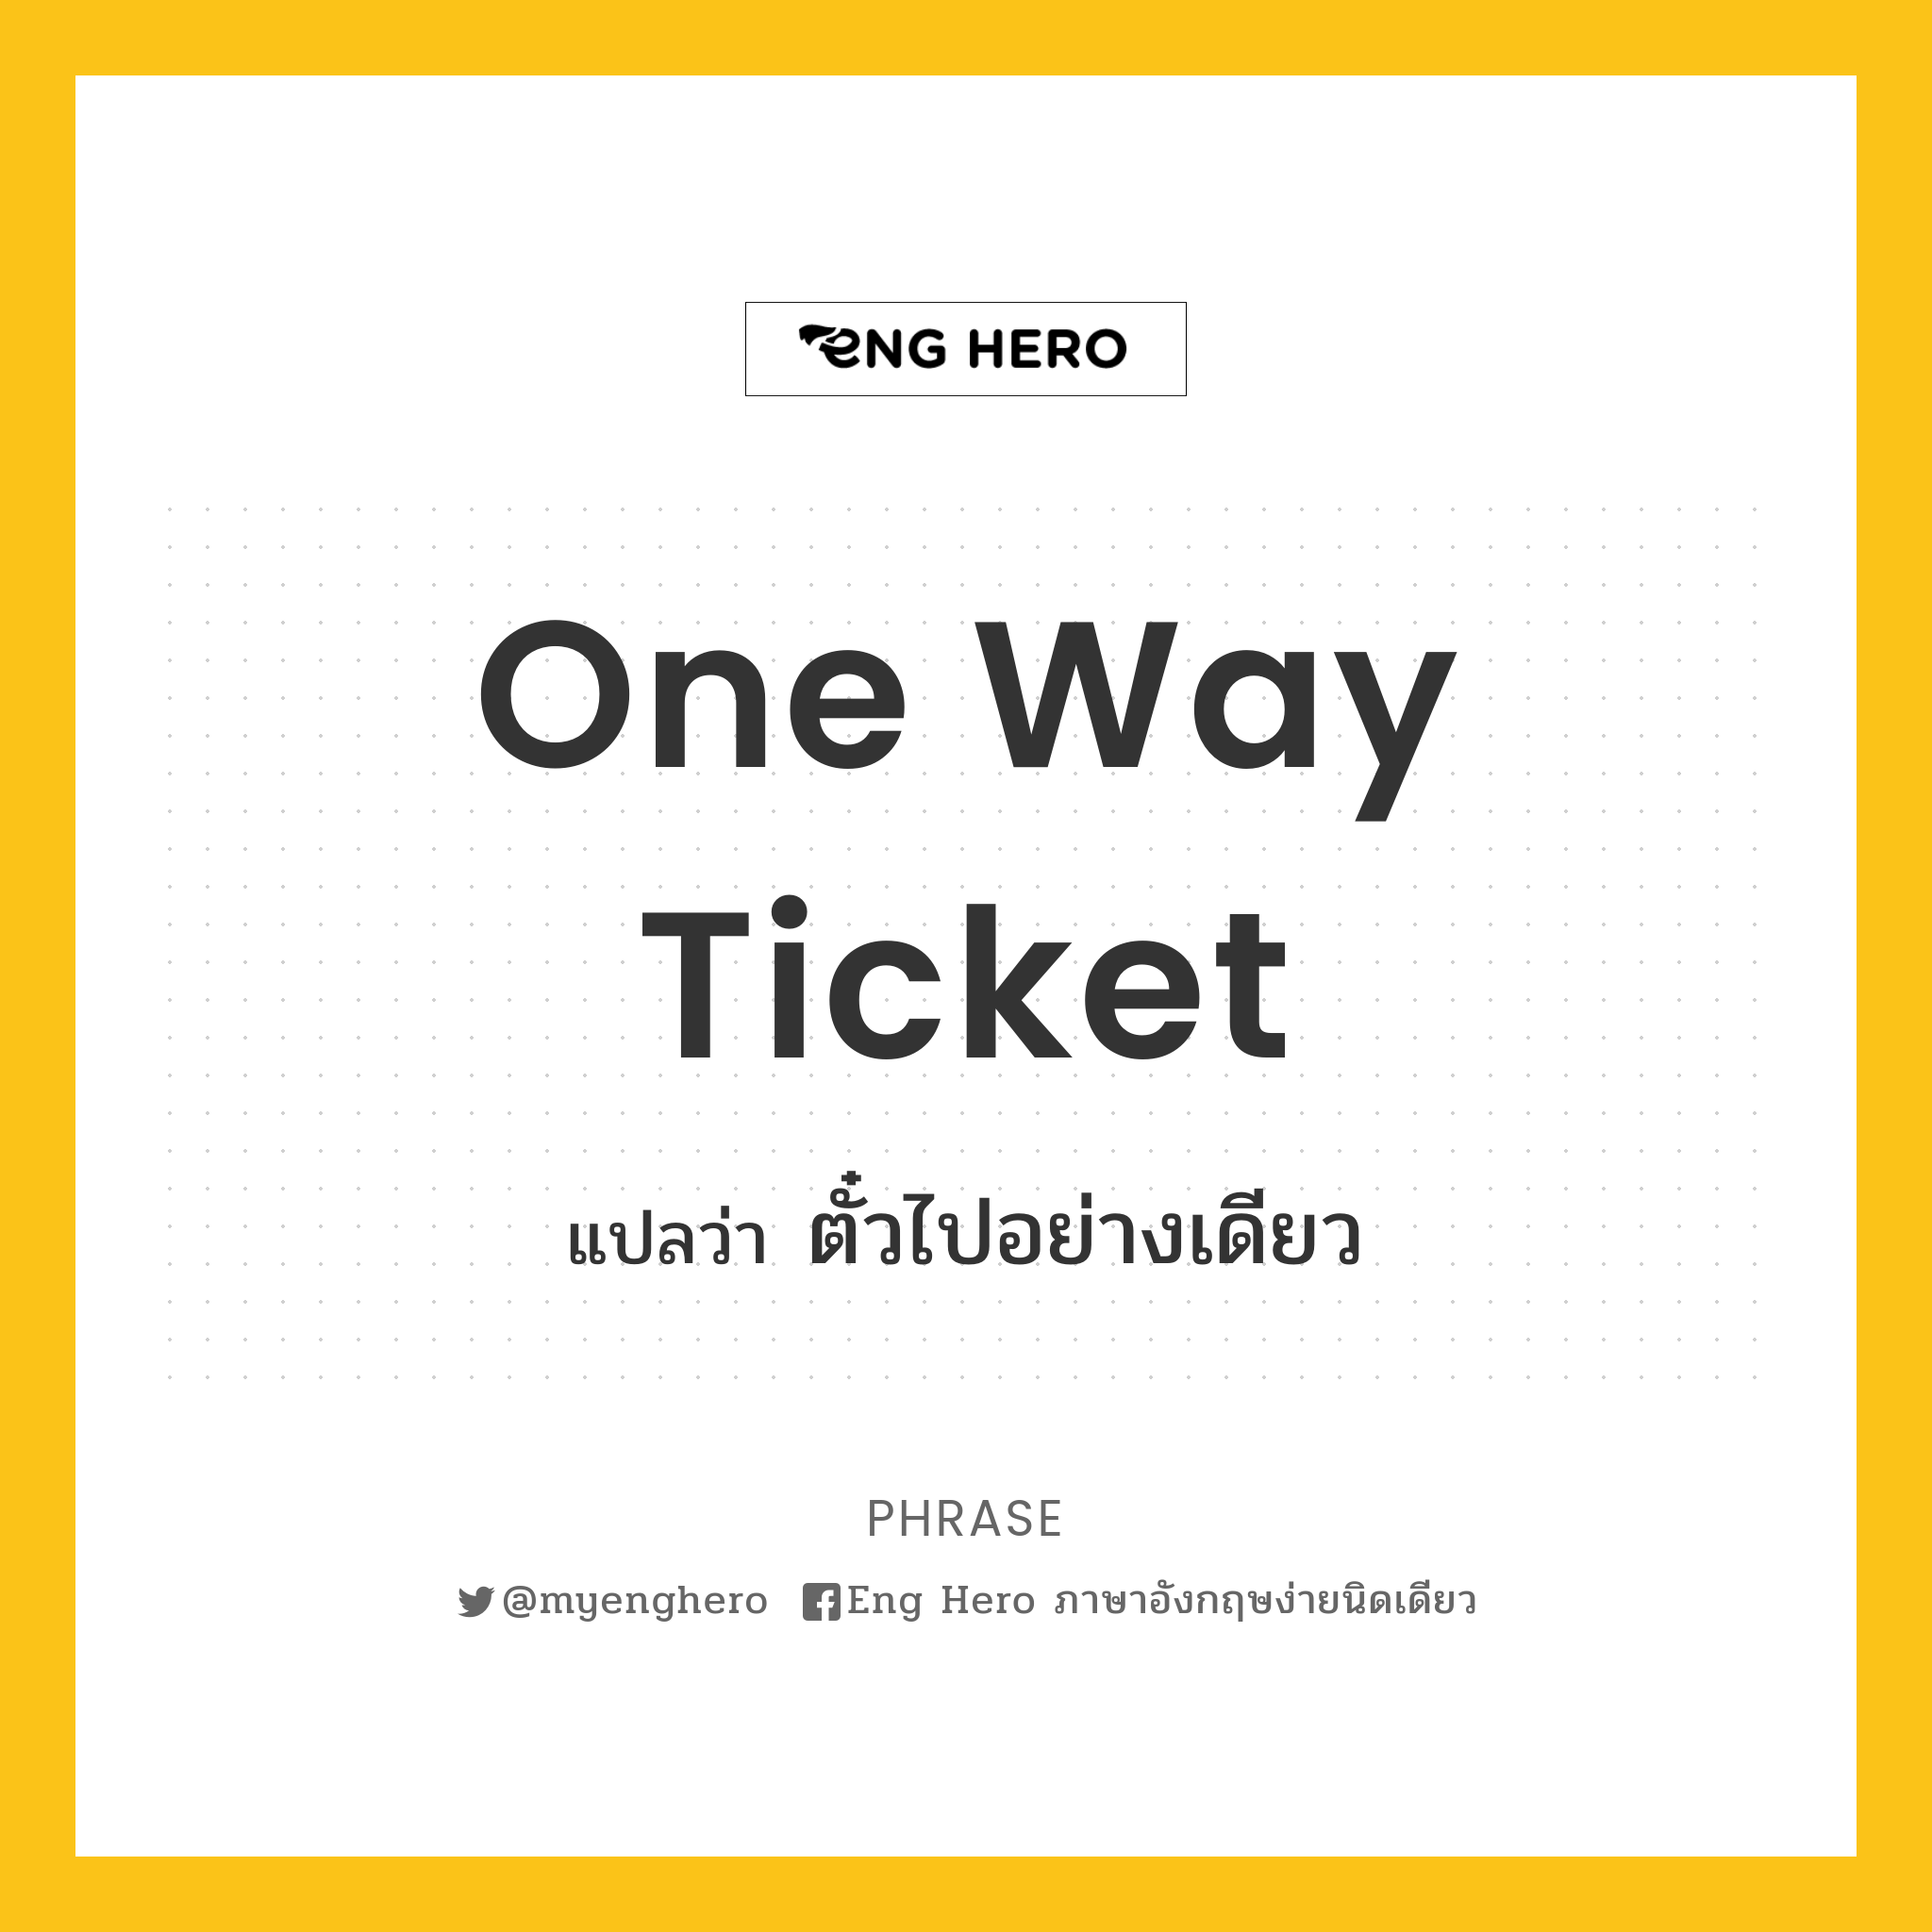 One way ticket